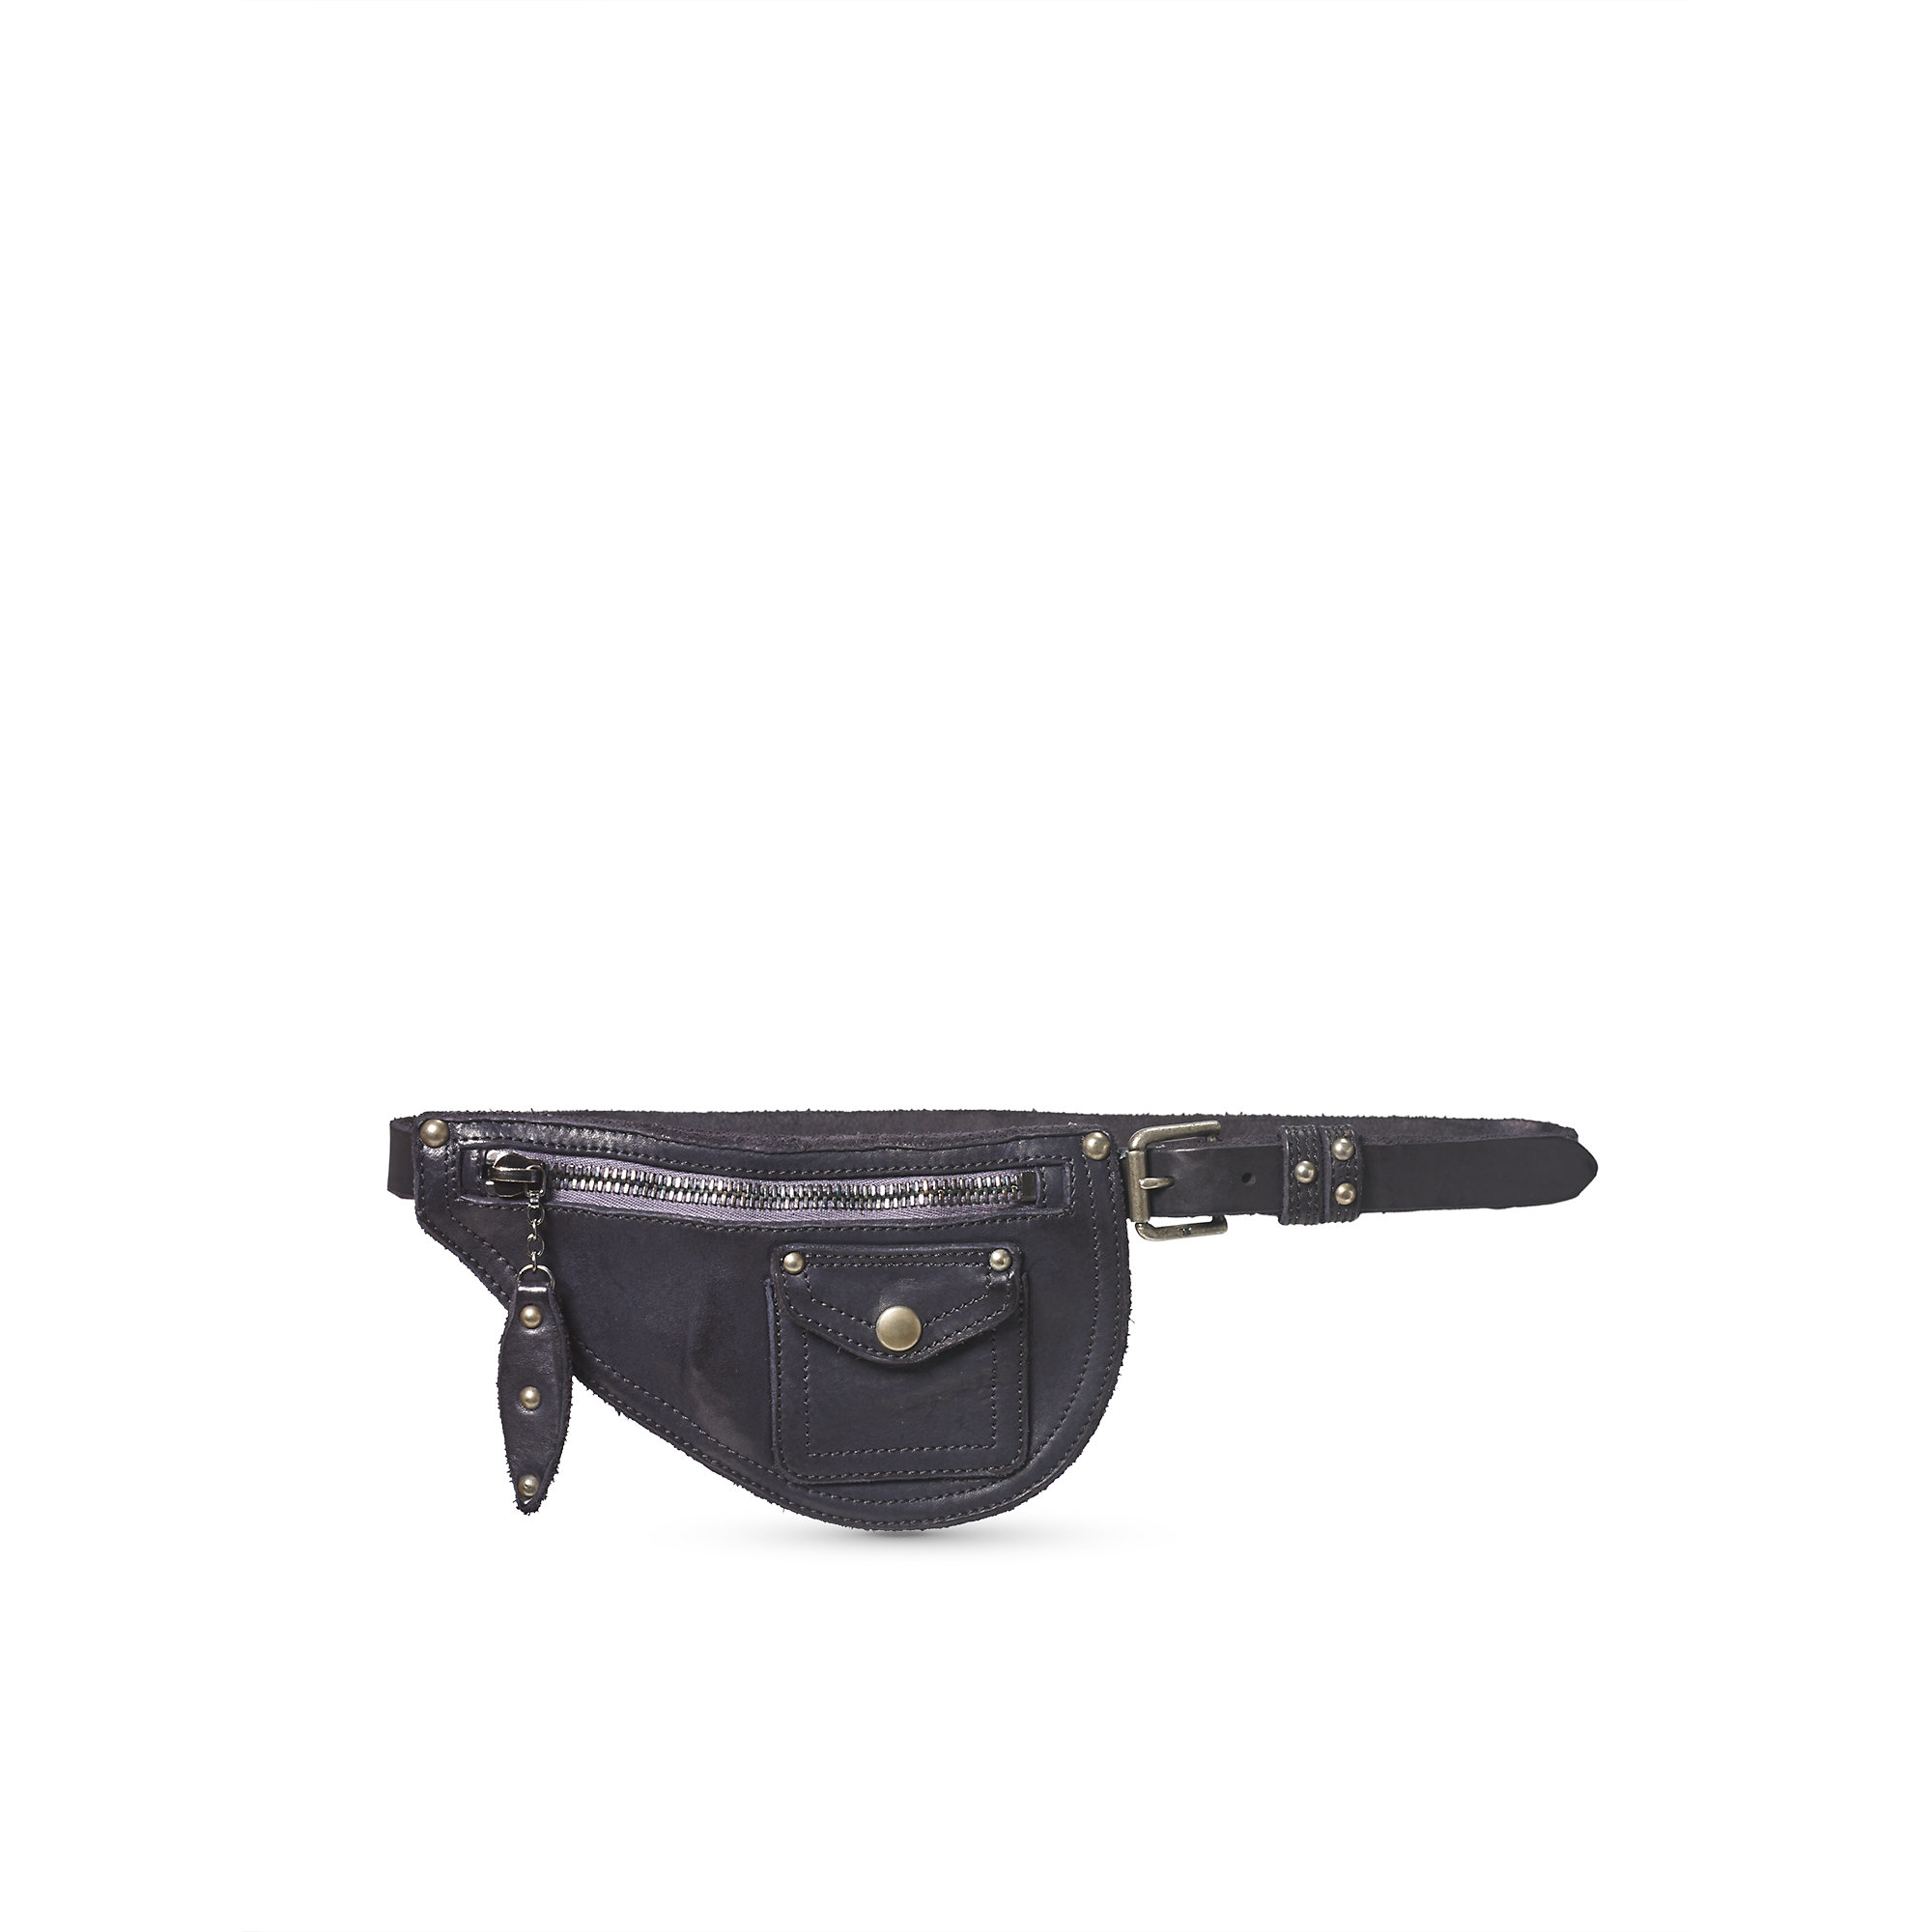 Lyst - Polo Ralph Lauren Studded Leather Belt Bag in Black